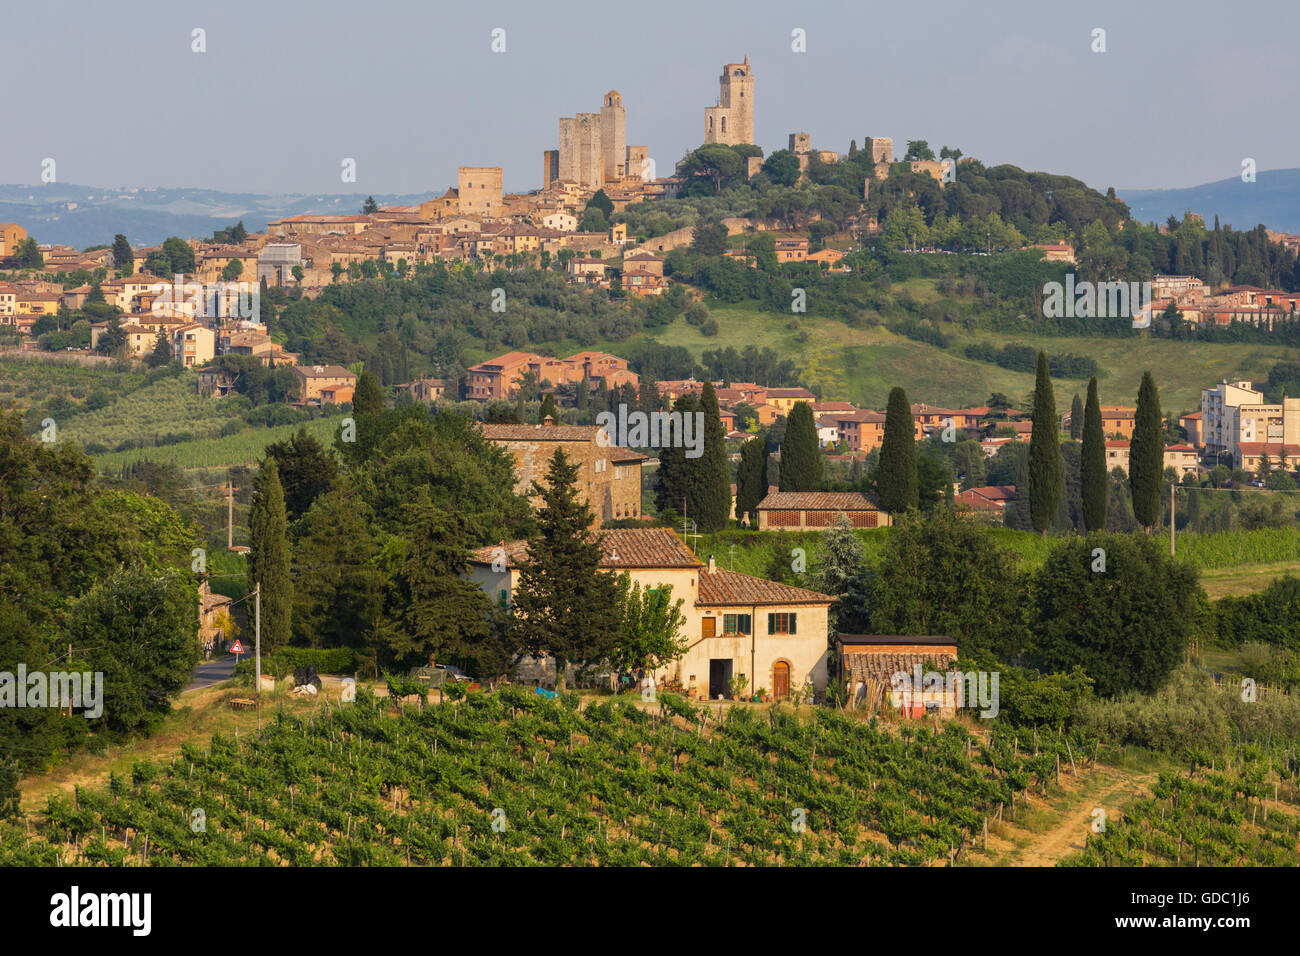 San Gimignano, Siena Province, Tuscany, Italy. Overall view across countryside. Vineyards, farmhouse. Stock Photo